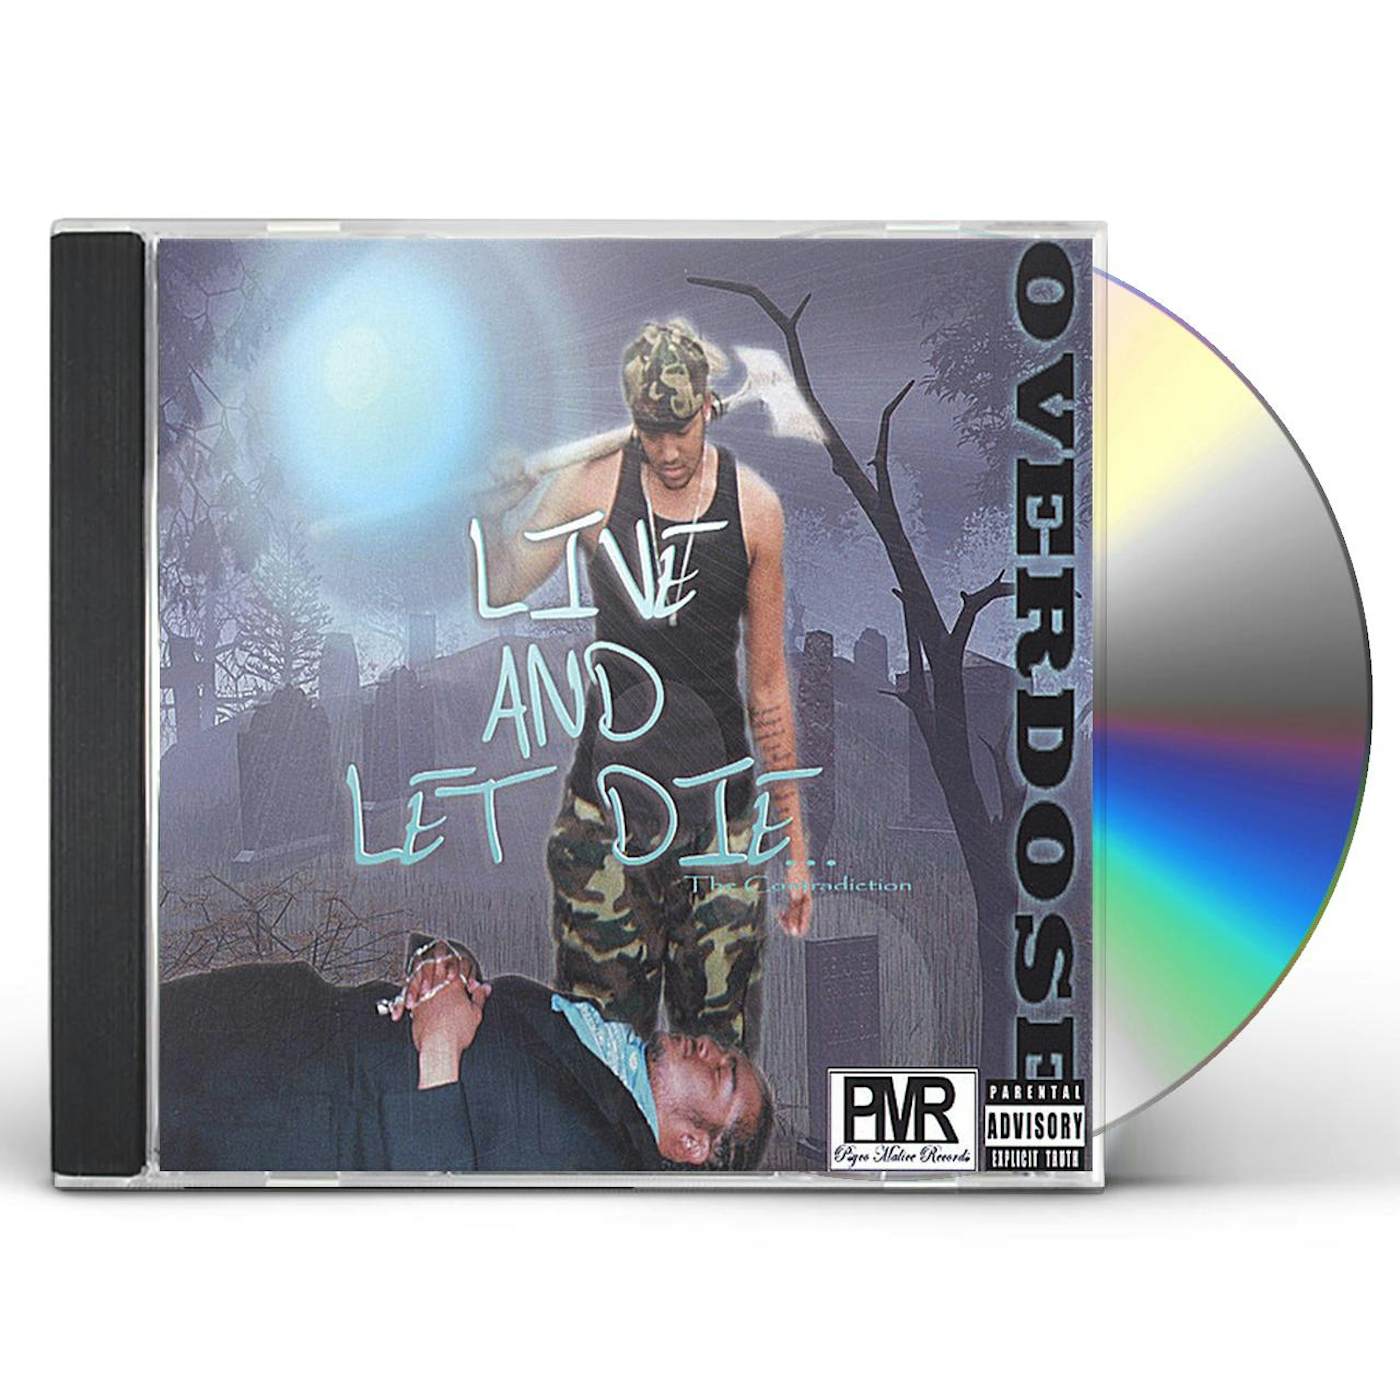 Overdose LIVE & LET DIETHE CONTRADICTION CD